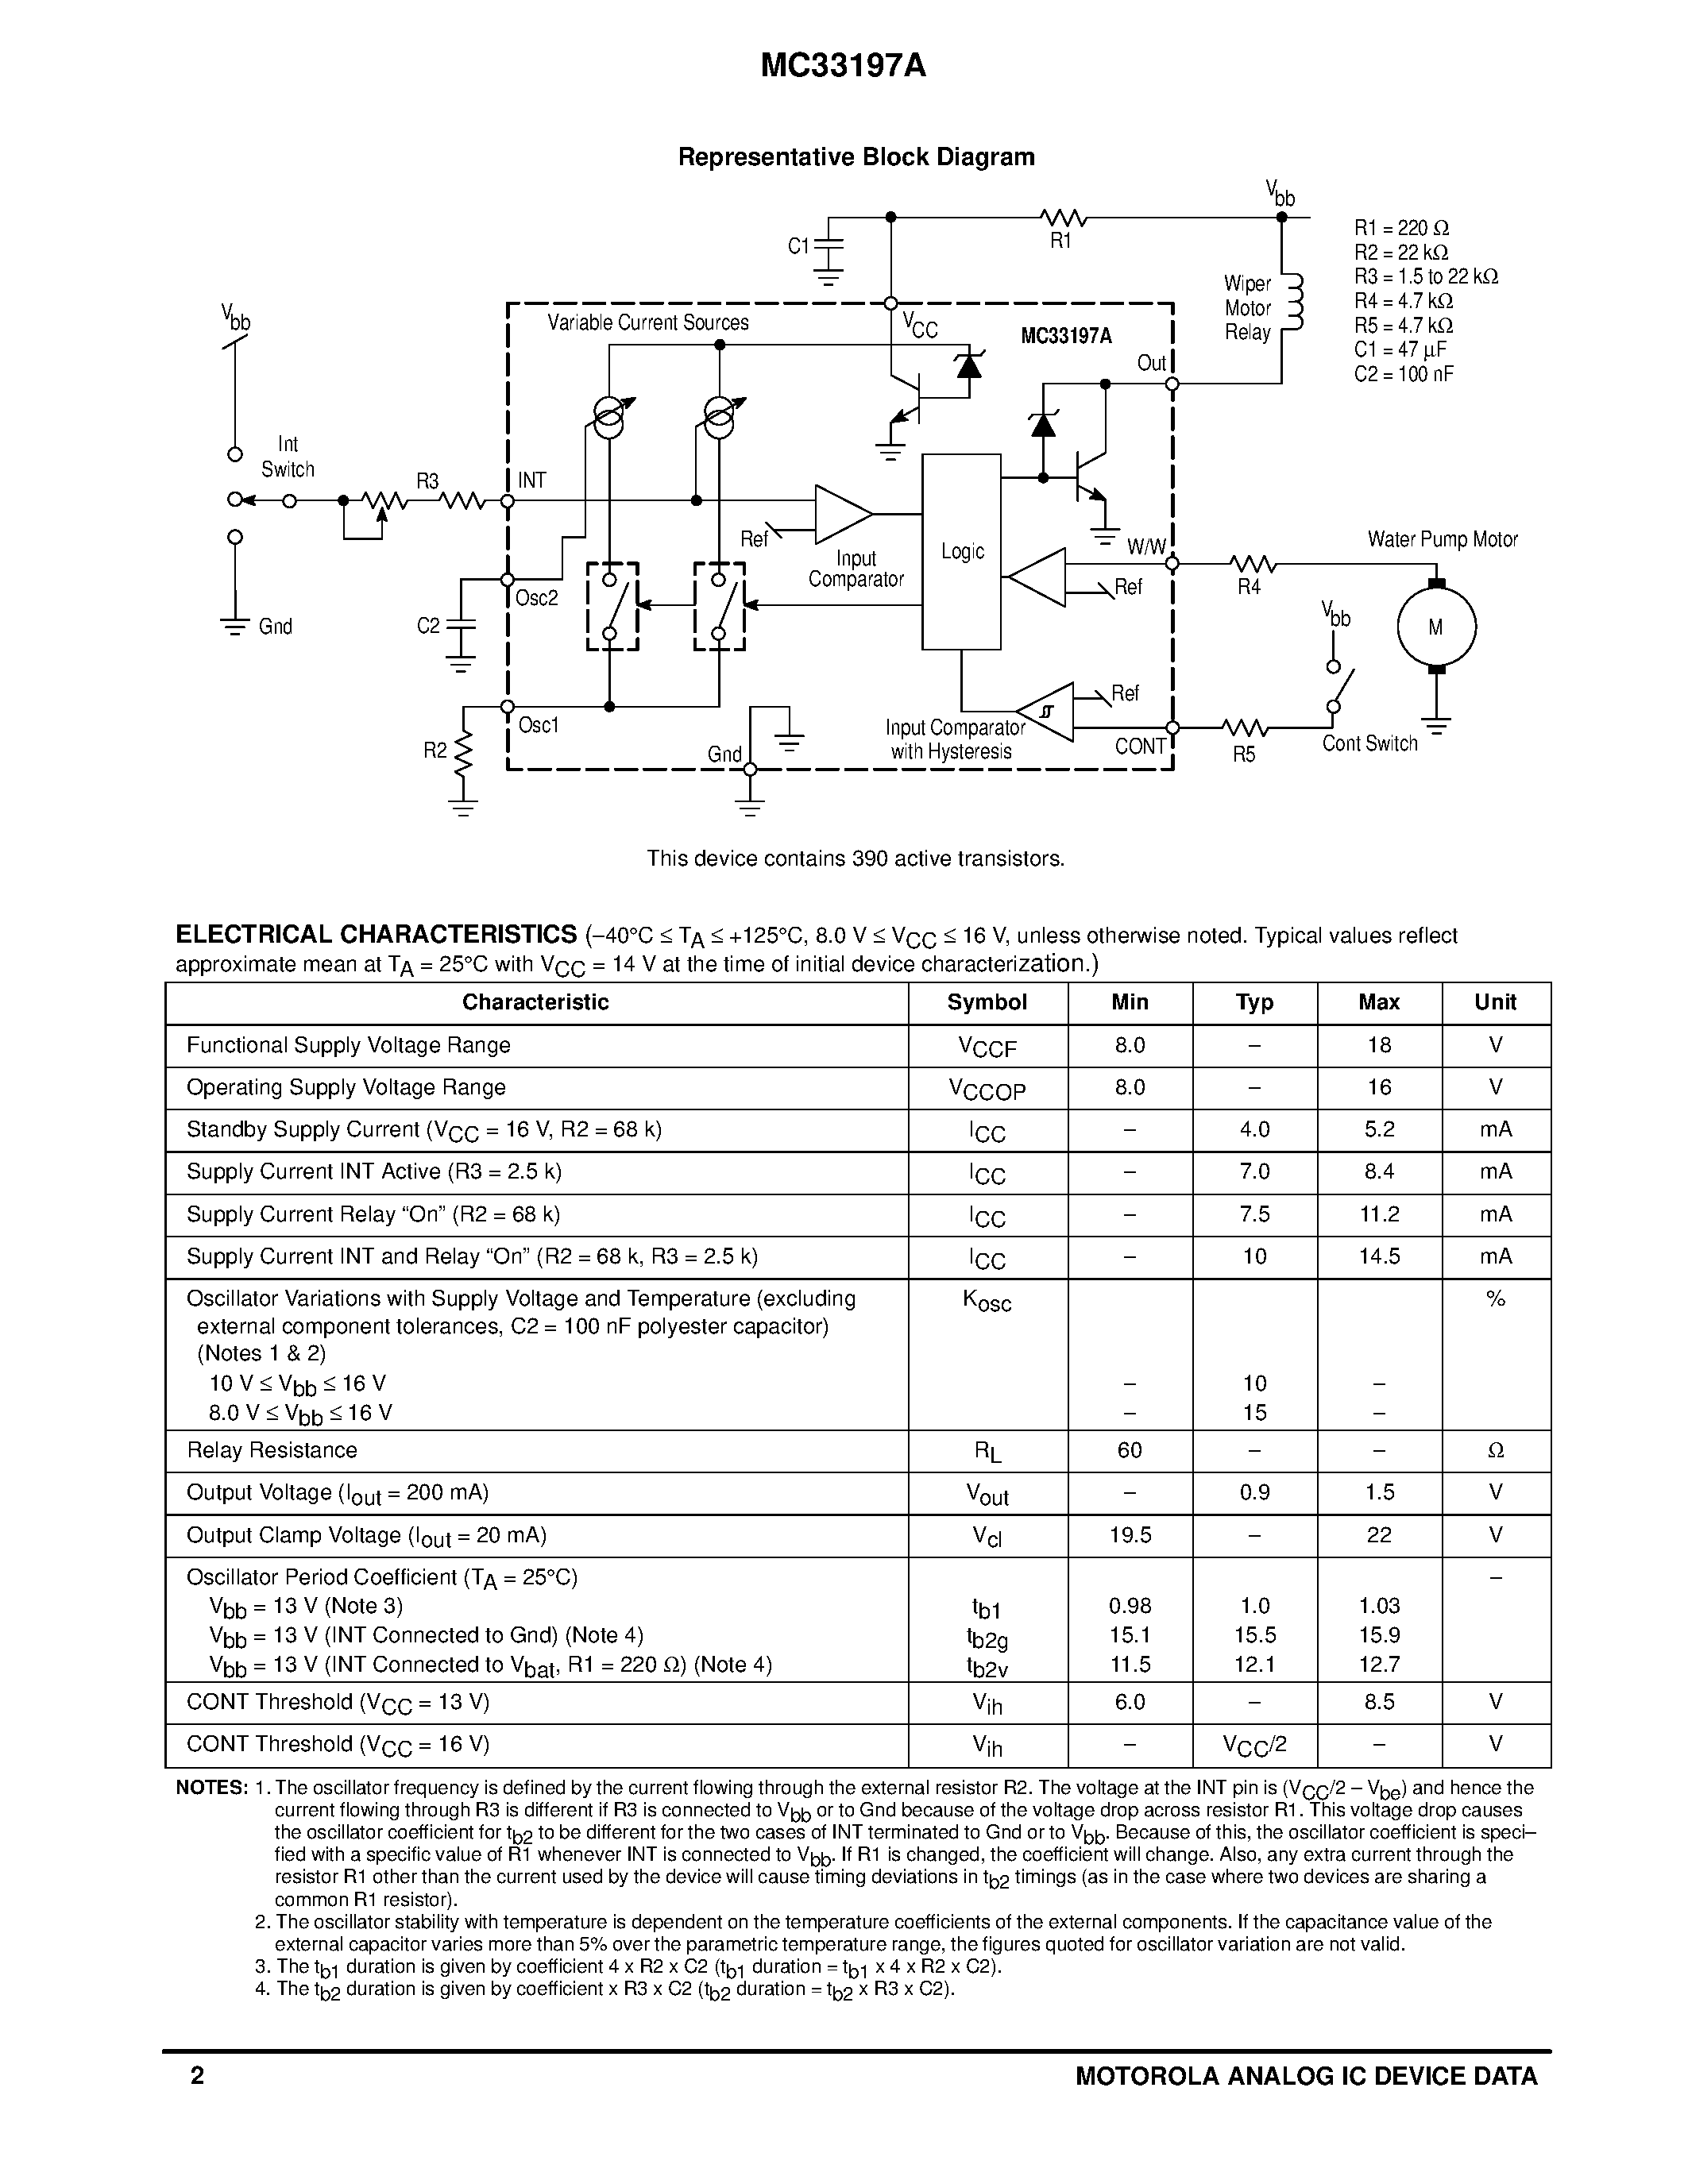 Datasheet MC33197A - AUTOMOTIVE WASH WIPER TIMER page 2